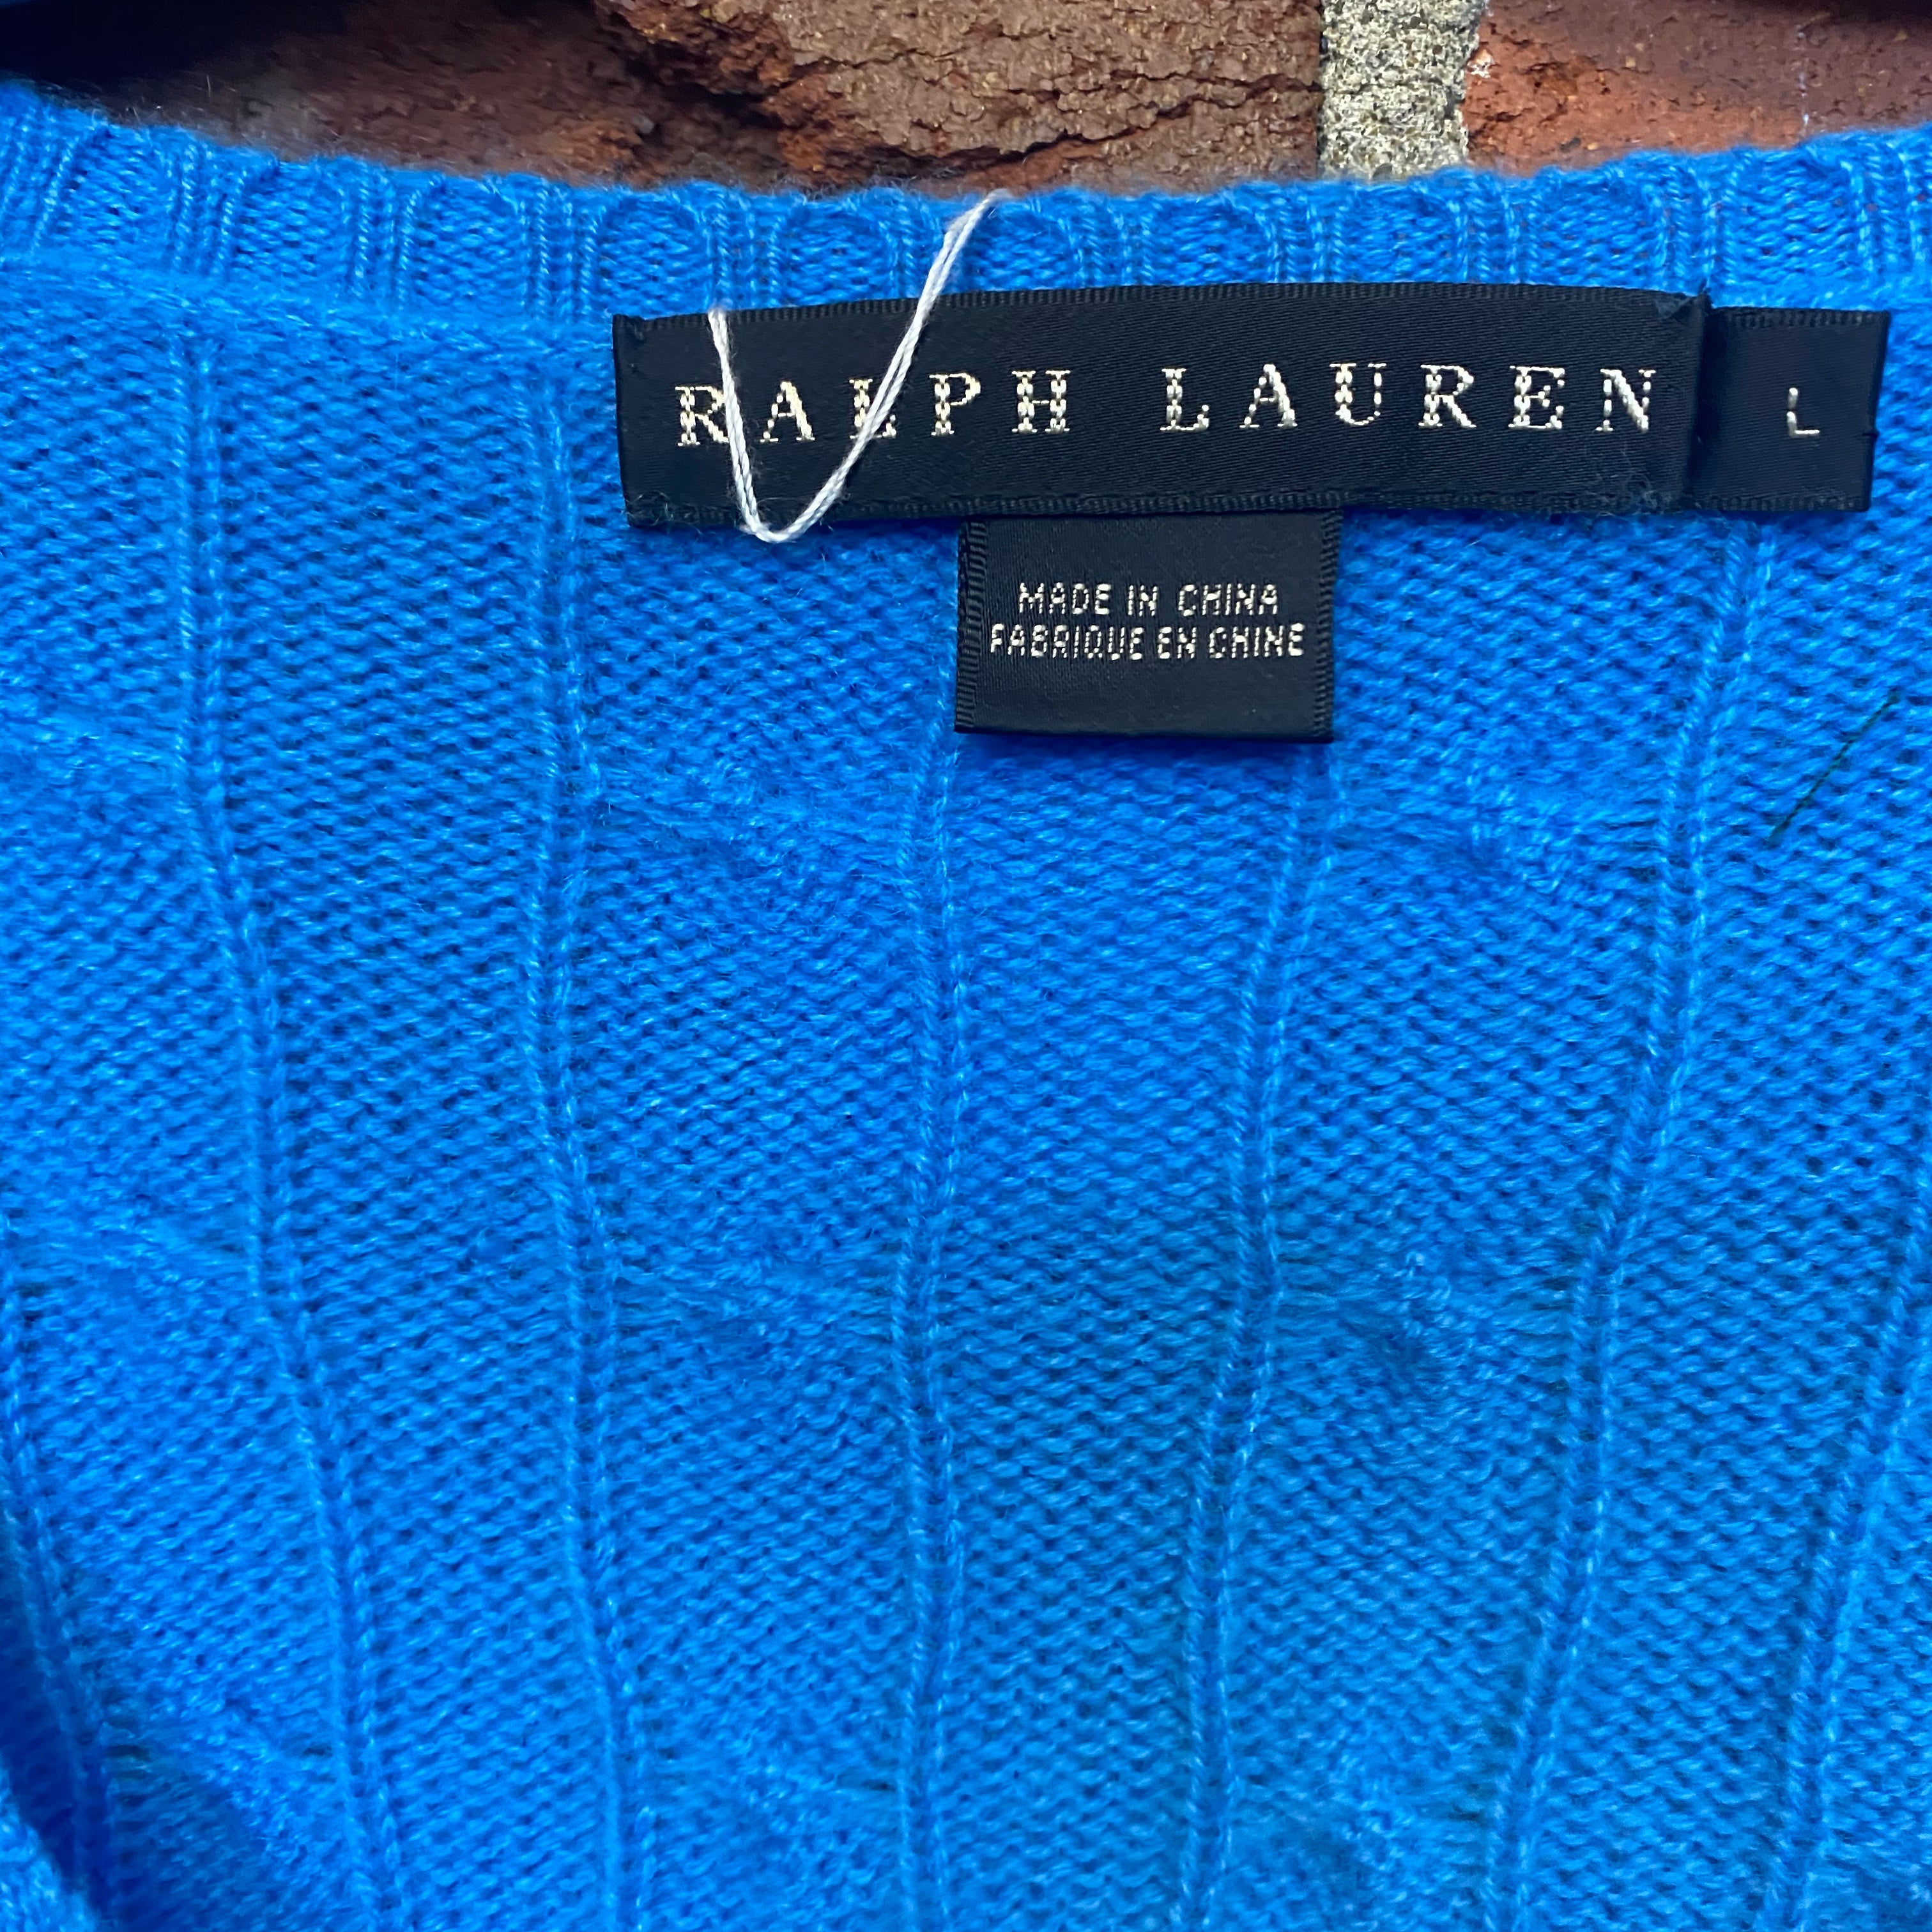 RAPLH LAUREN cashmere jumper